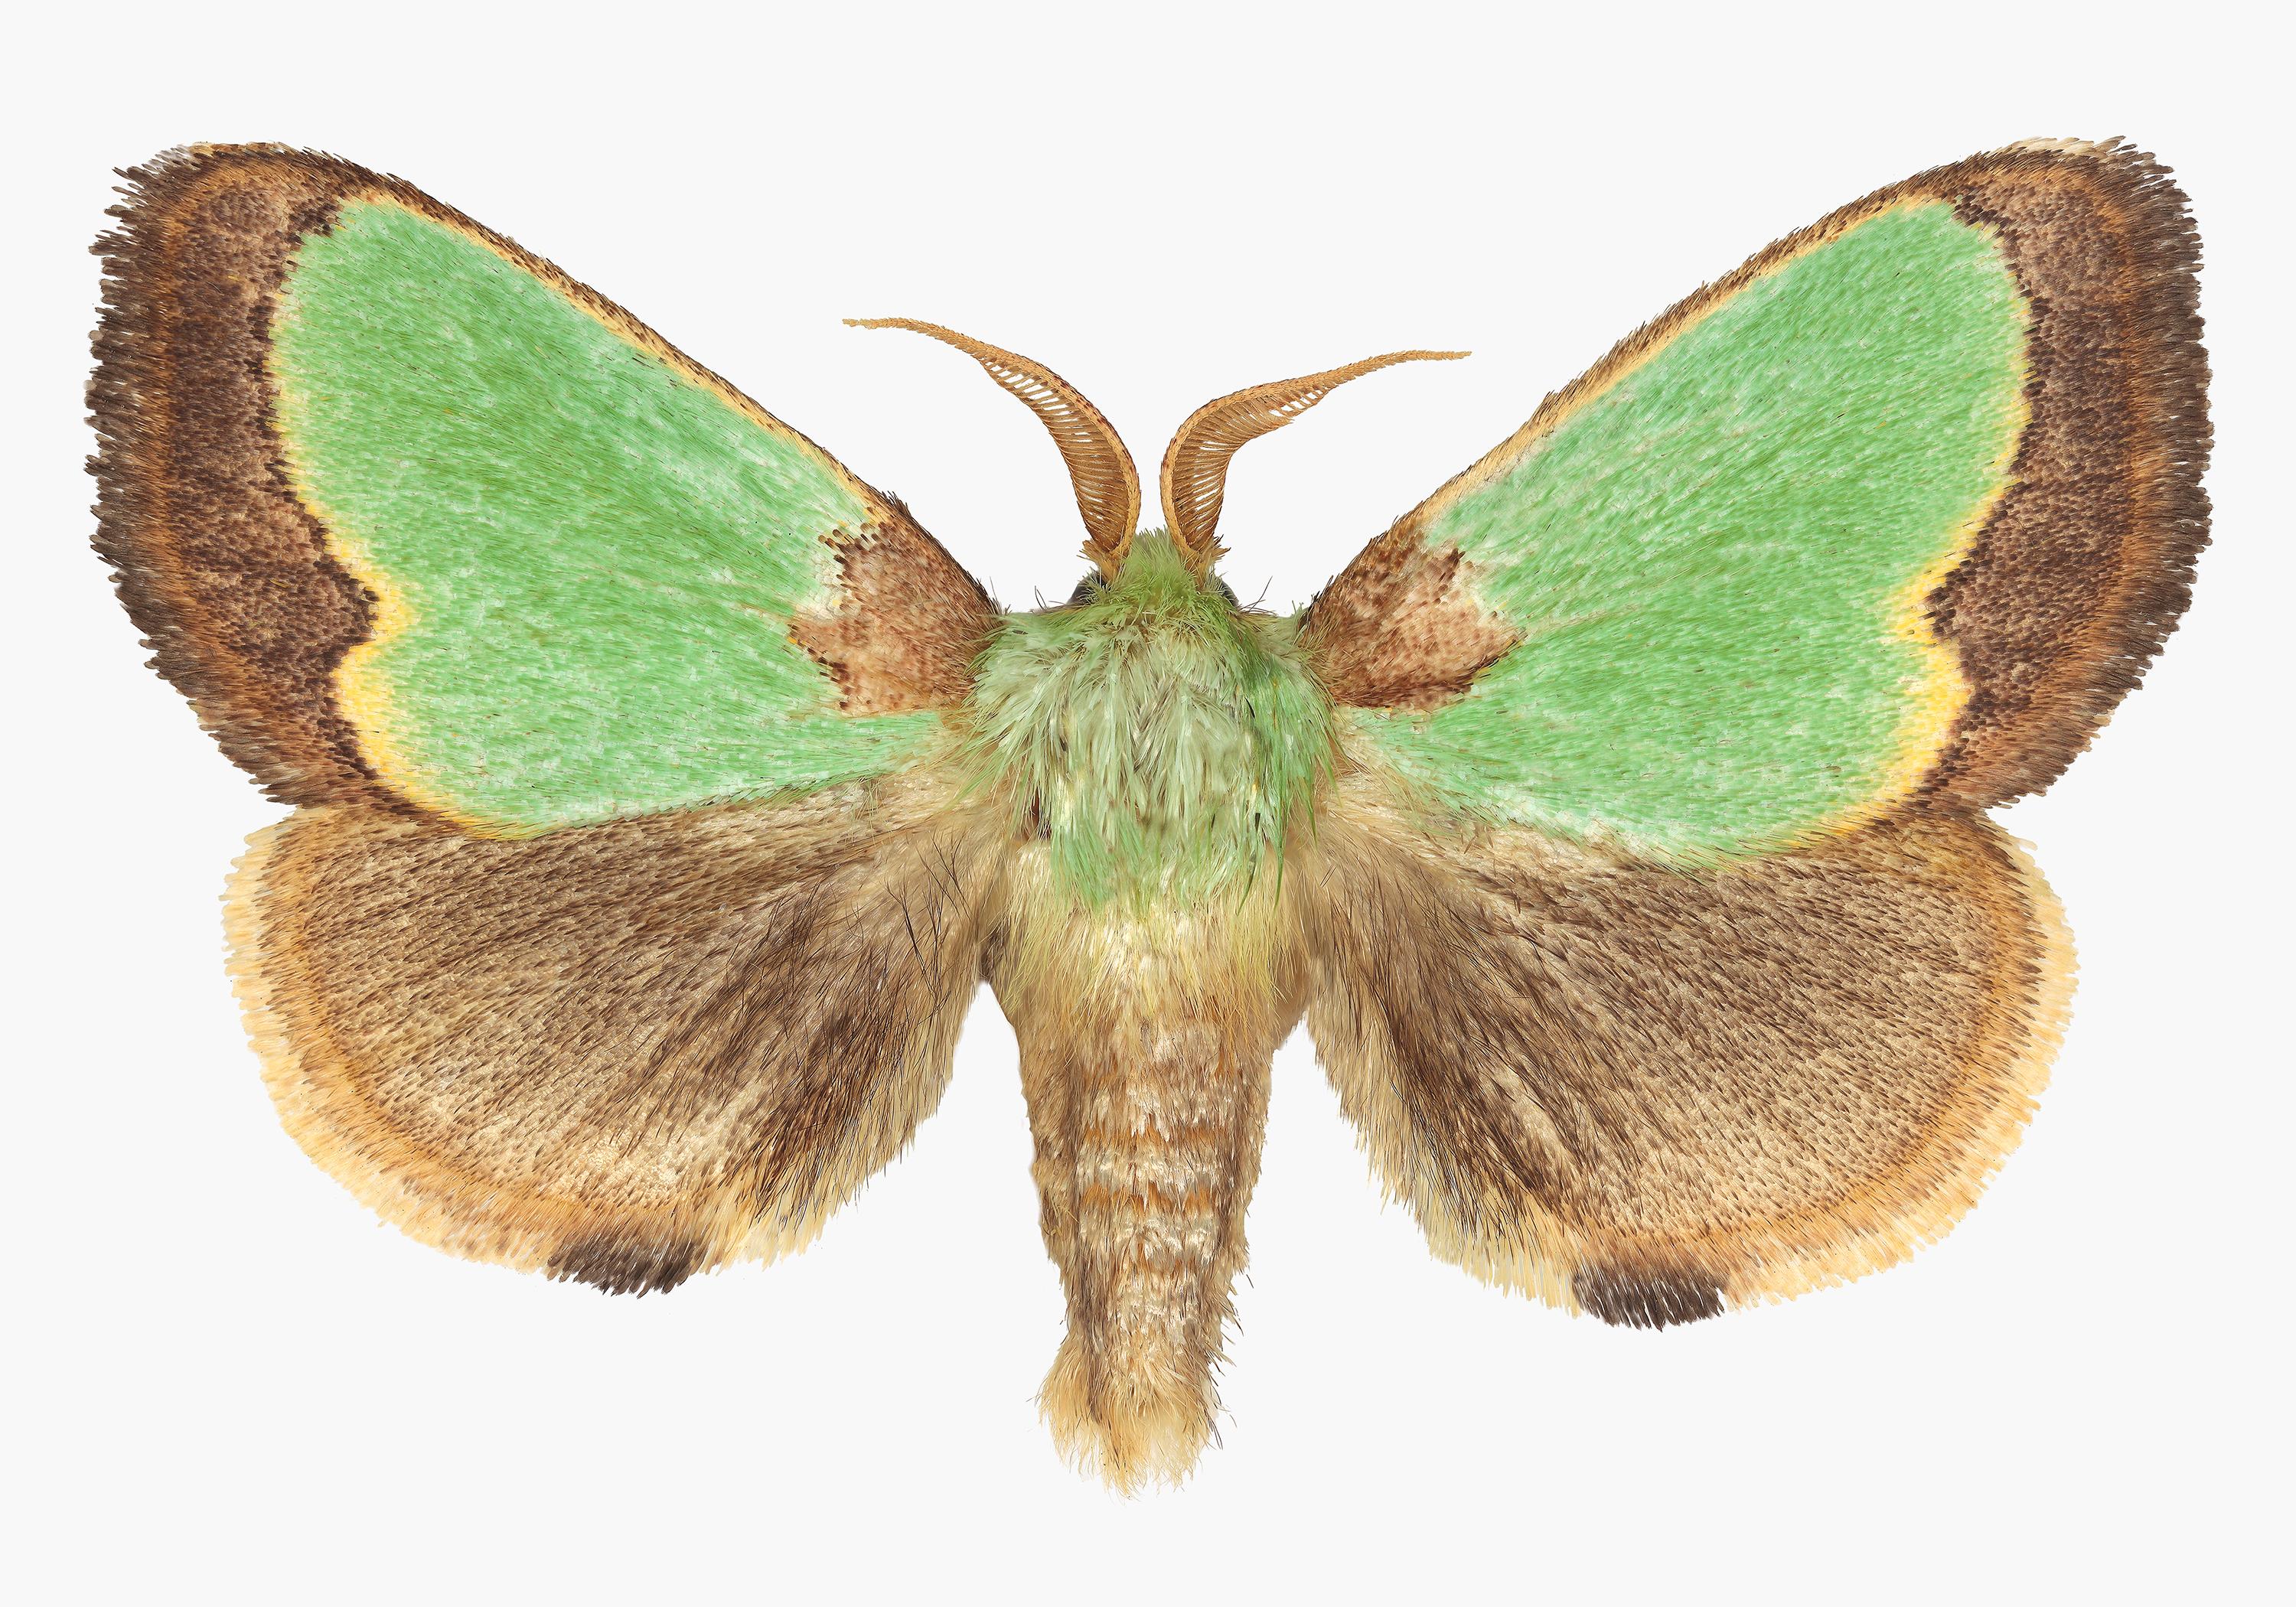 Joseph Scheer Color Photograph - Parasa Hilarula, Nature Insect Photograph, Light Green, Brown Moth on White